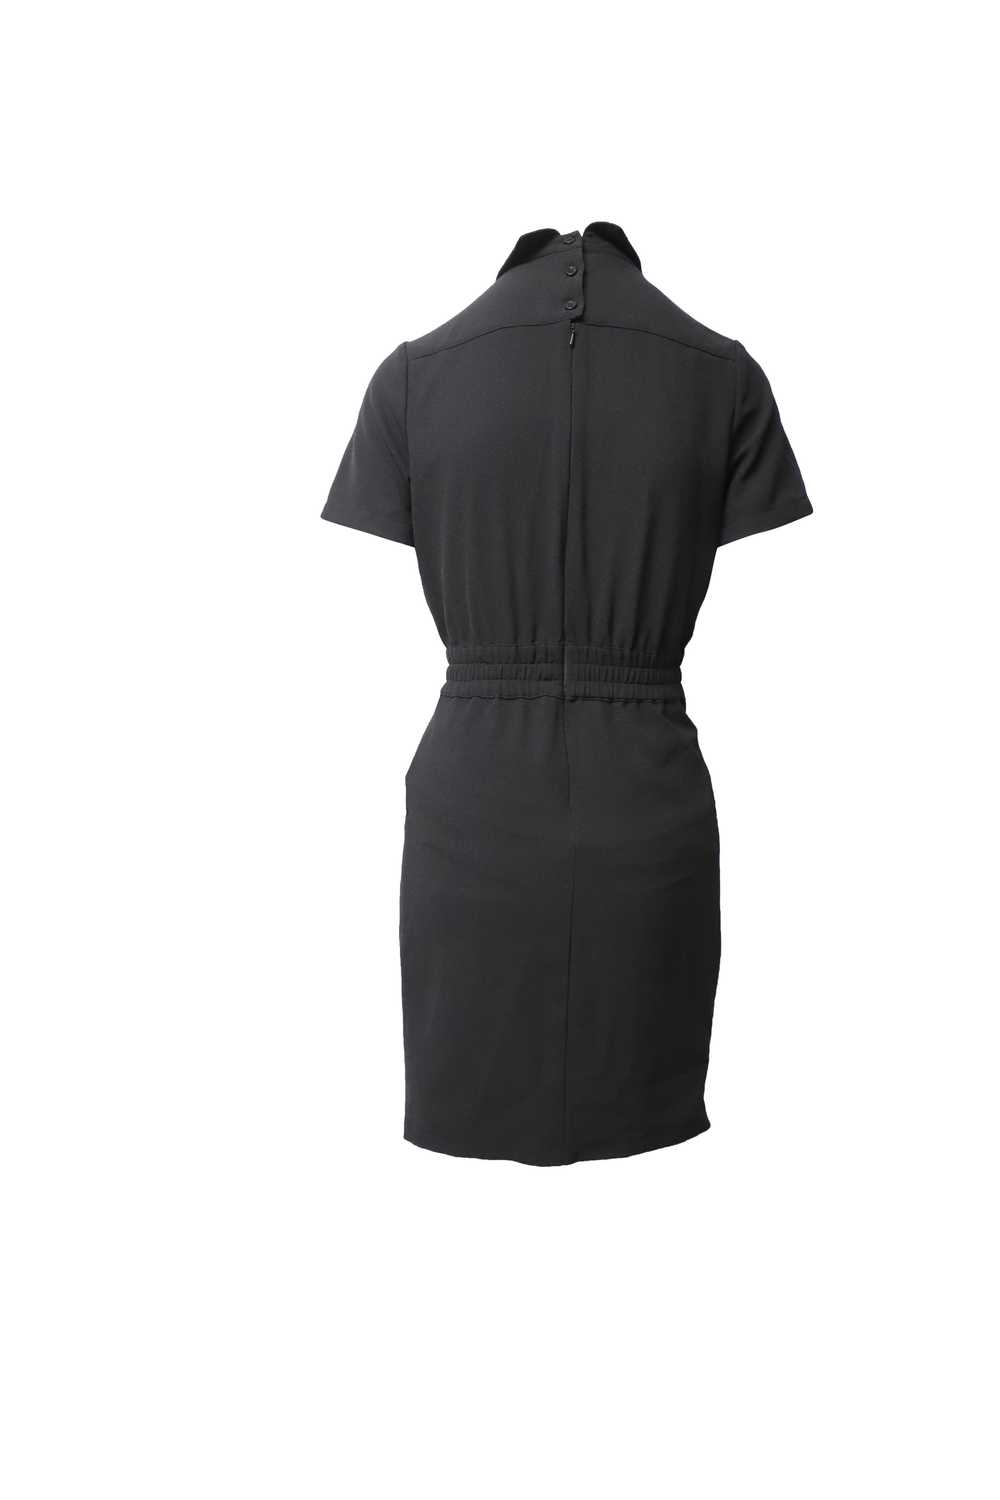 Ganni Black crepe collared mini dress - image 4